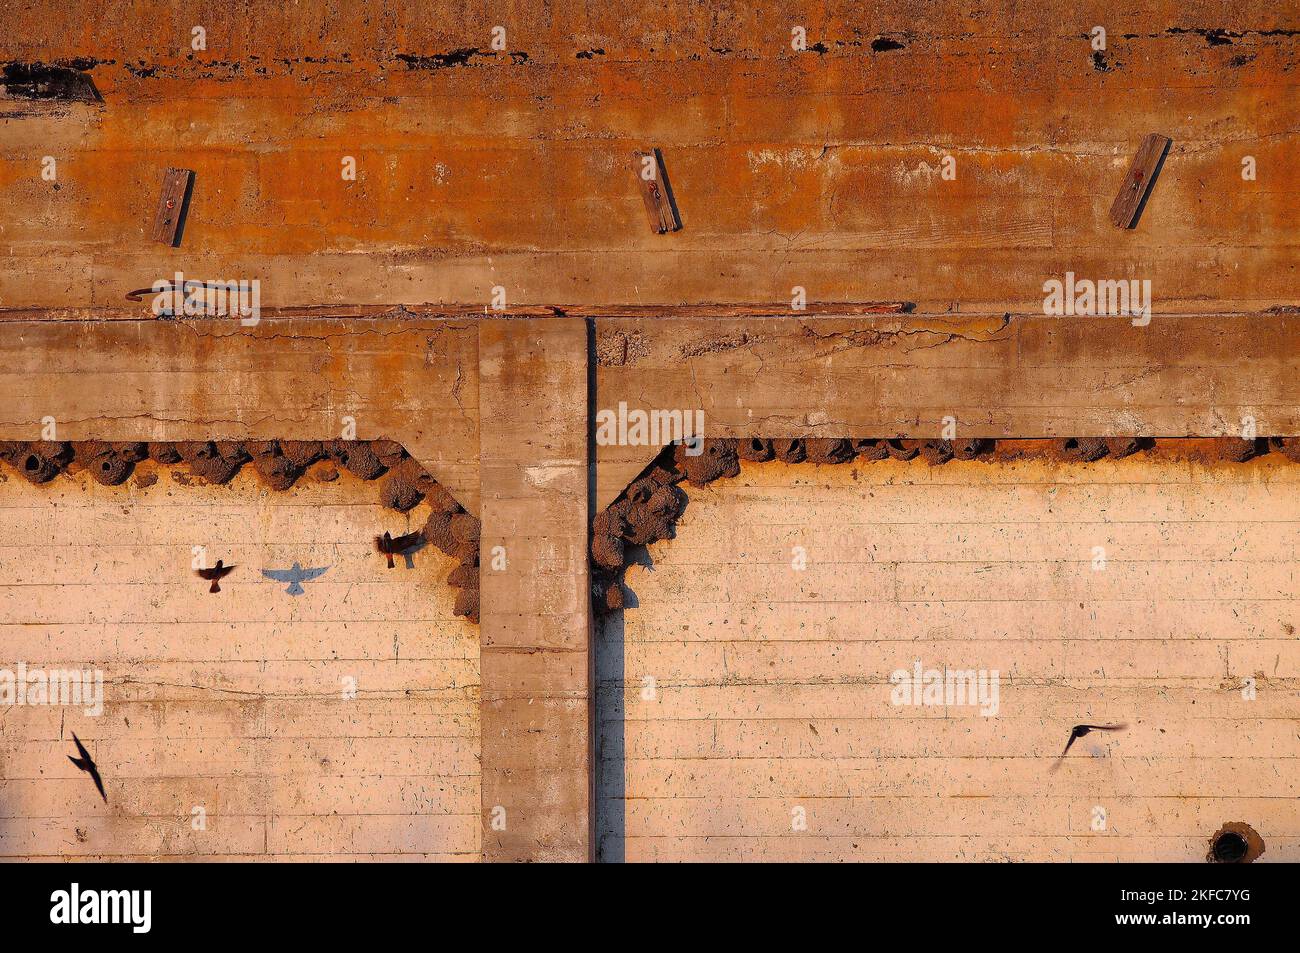 Cliff swallow, Petrochelidon pyrrhonta mud nests on a wall in Alviso California USA Stock Photo